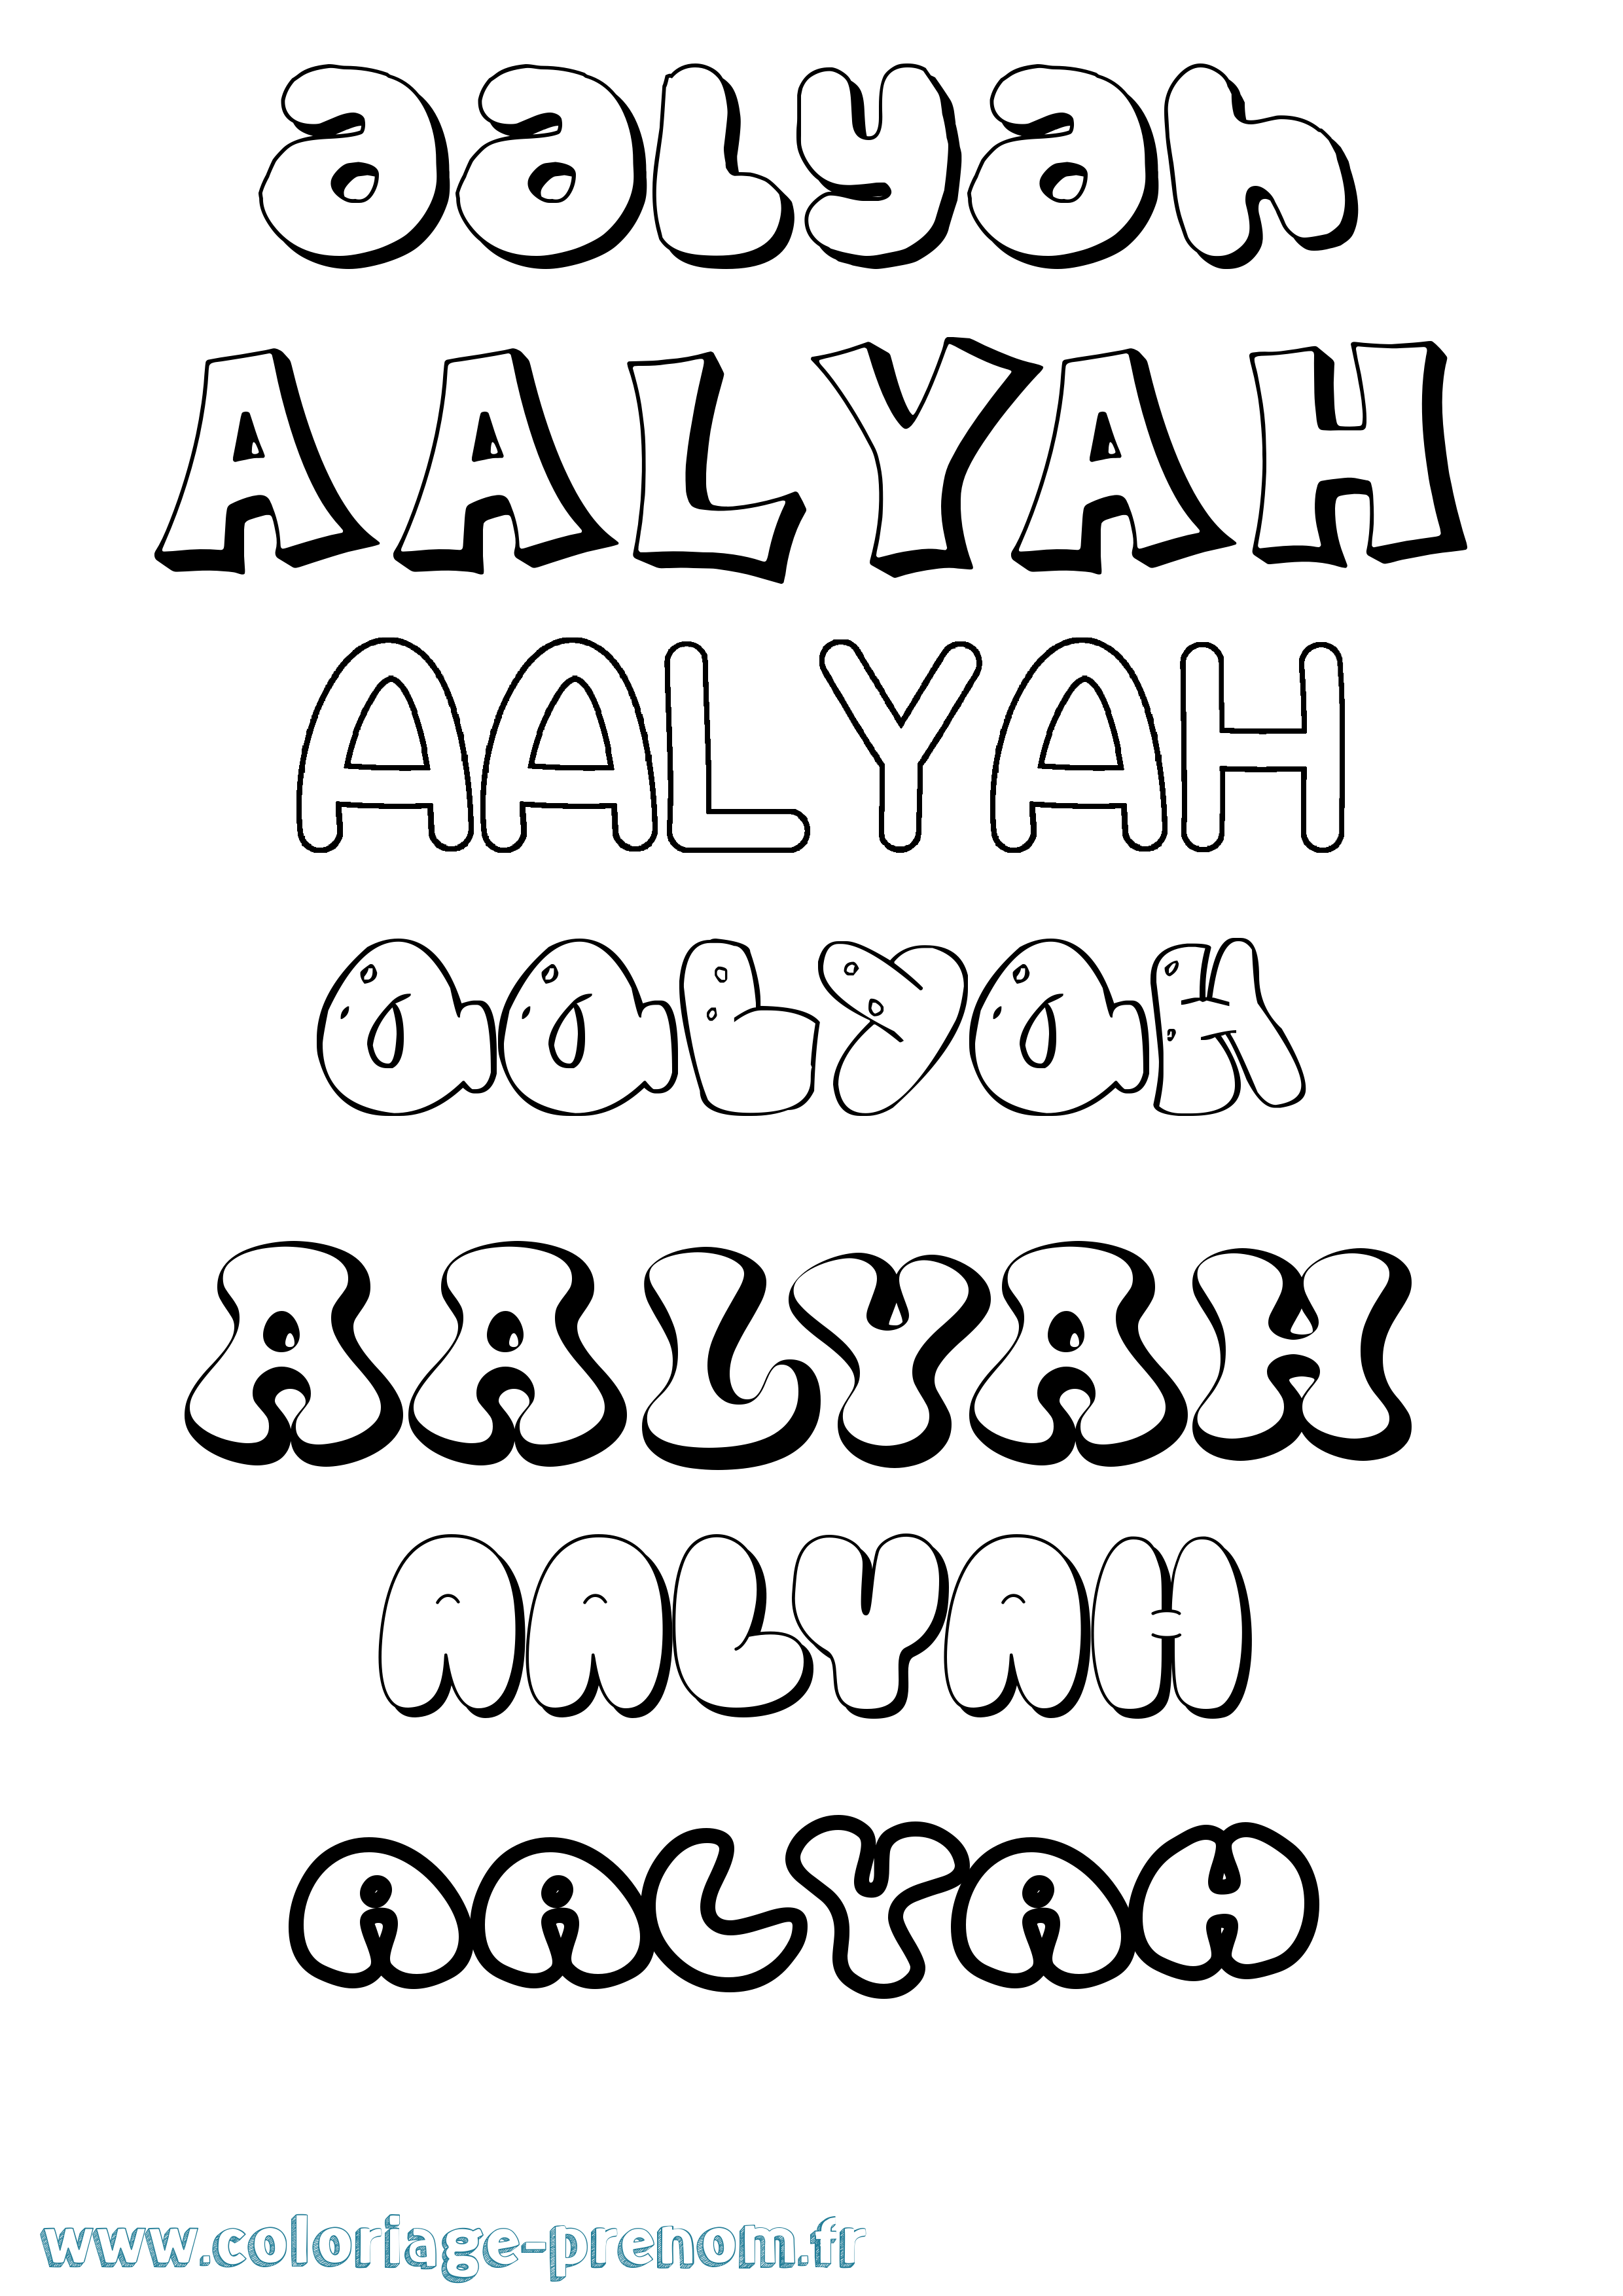 Coloriage prénom Aalyah Bubble